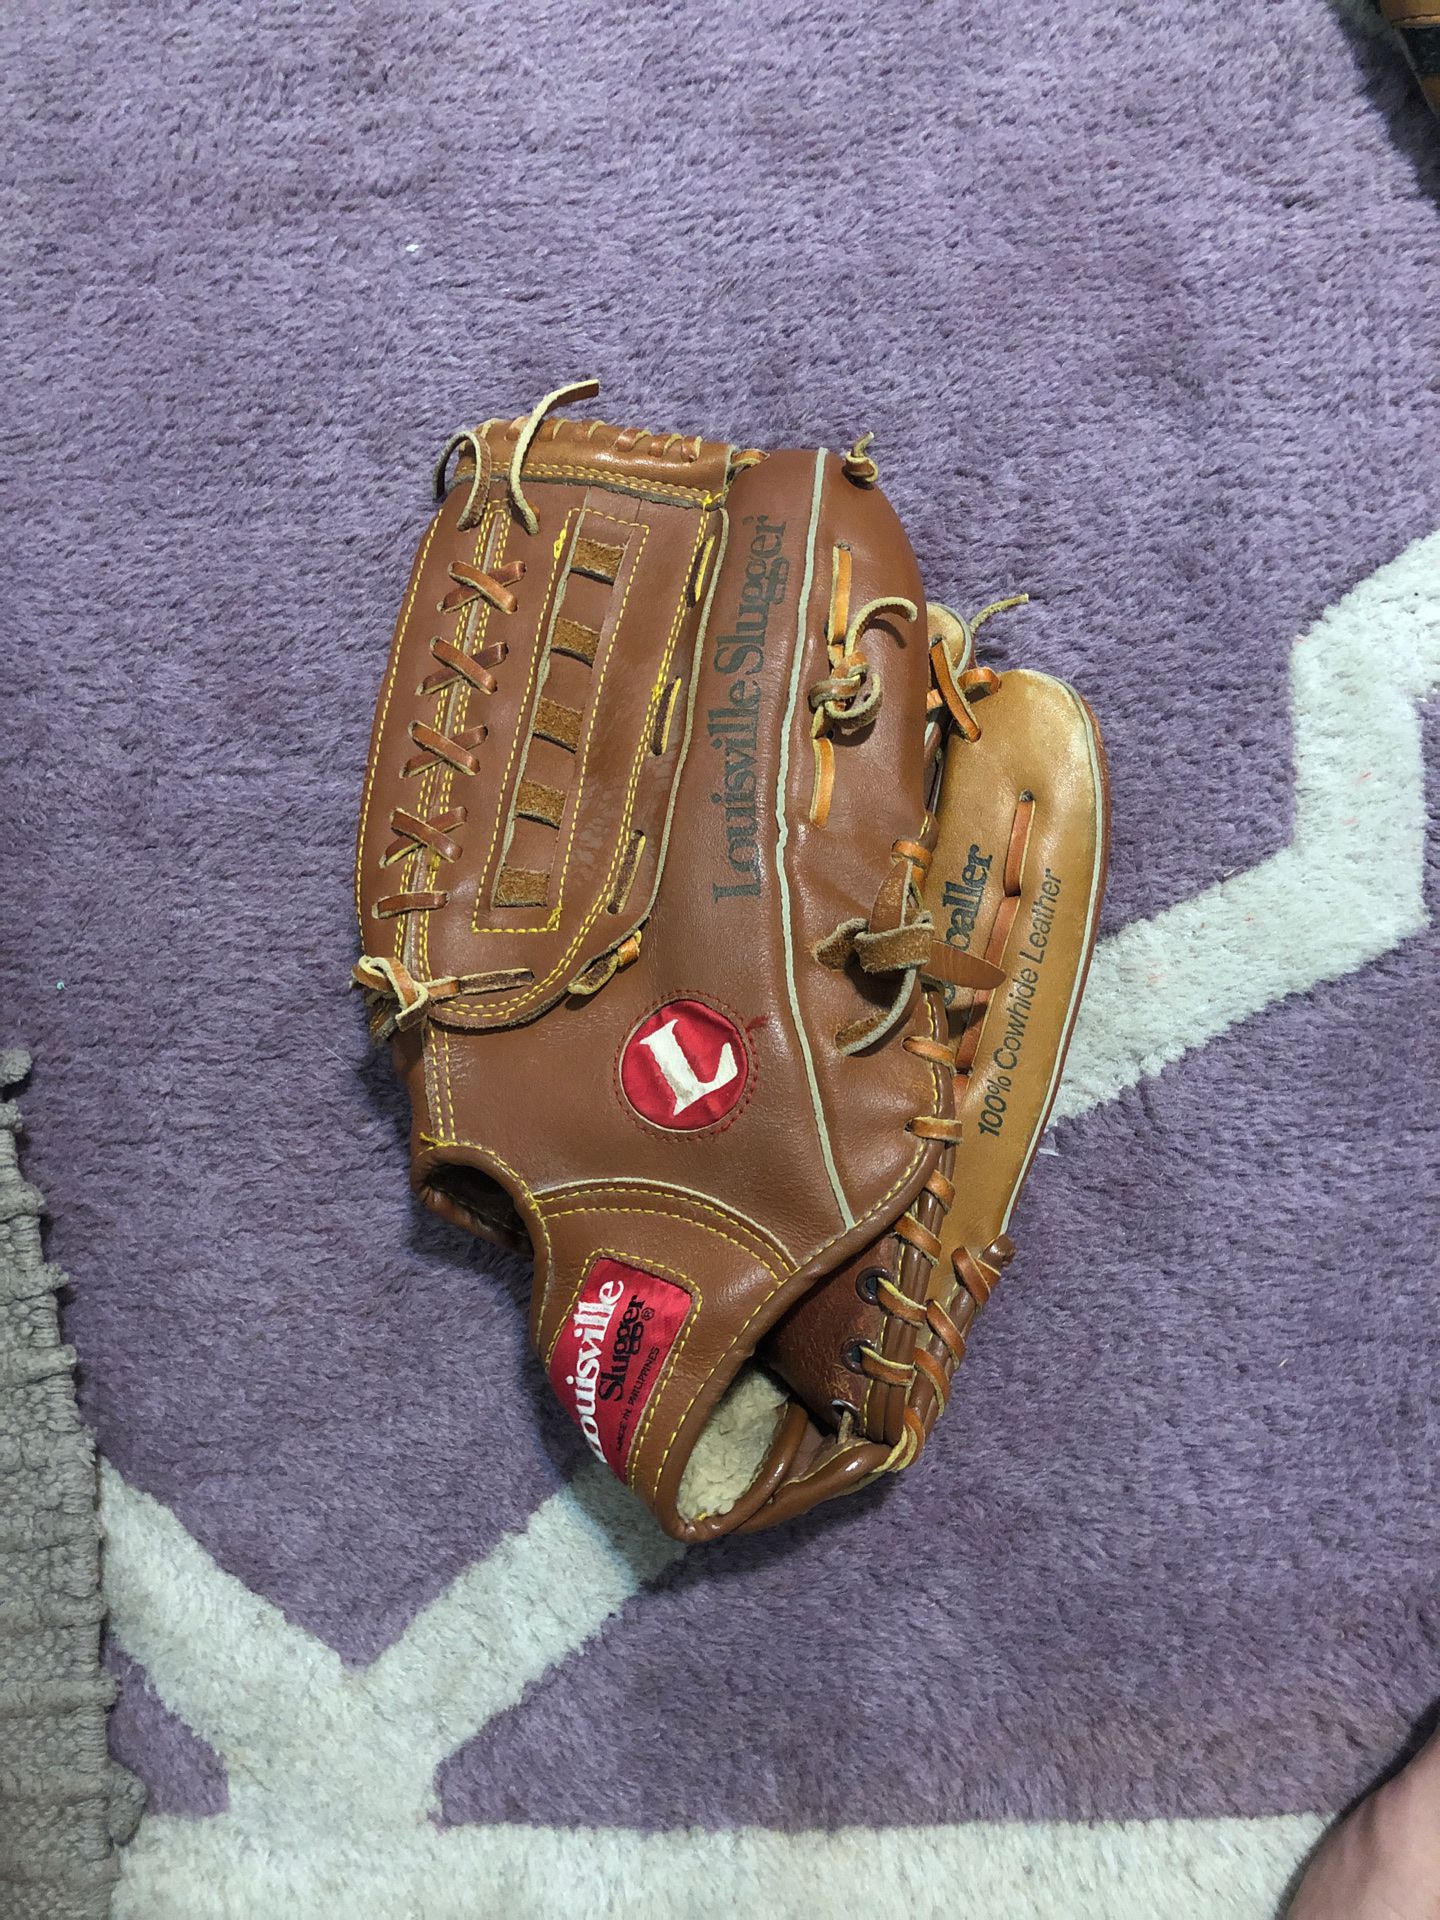 Louisville slugger baseball/softball glove 13.5